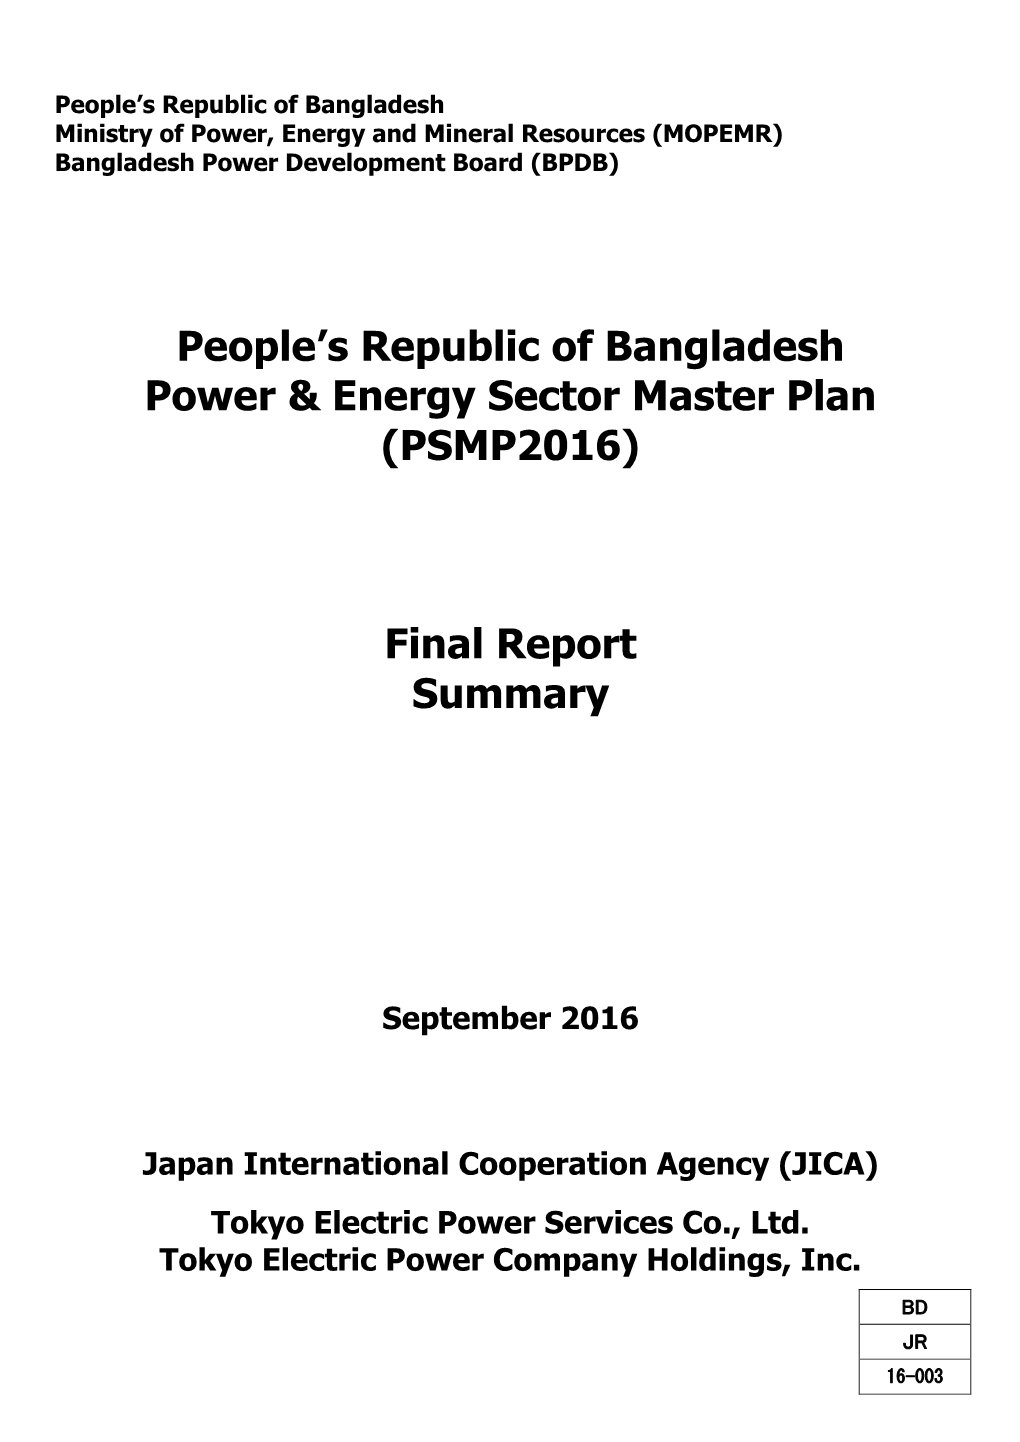 People's Republic of Bangladesh Power & Energy Sector Master Plan - DocsLib